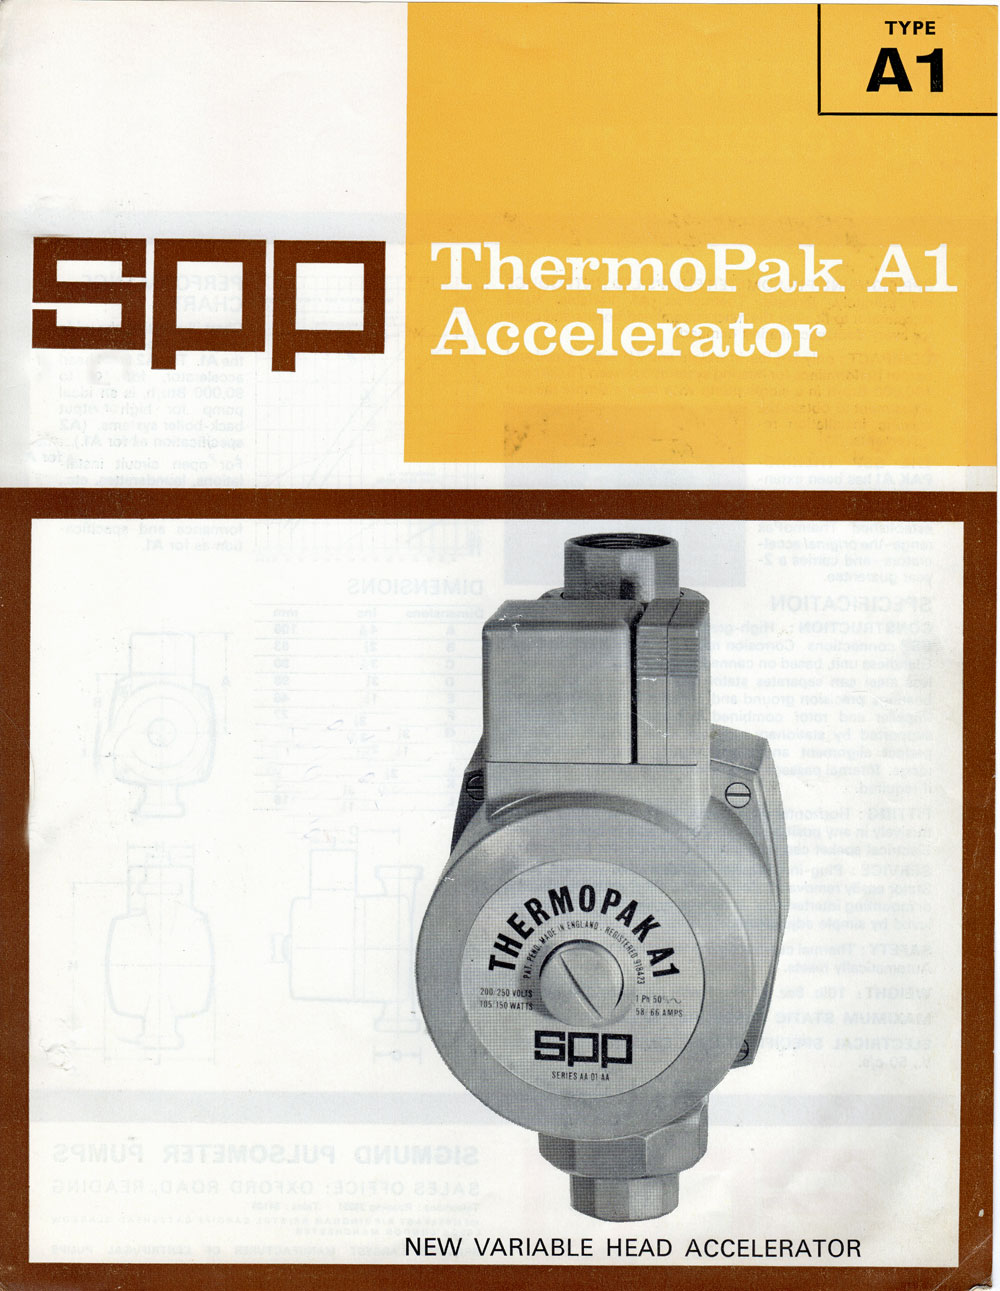 sigmund pulsometer pumps - thermopak A1 glandless circulators